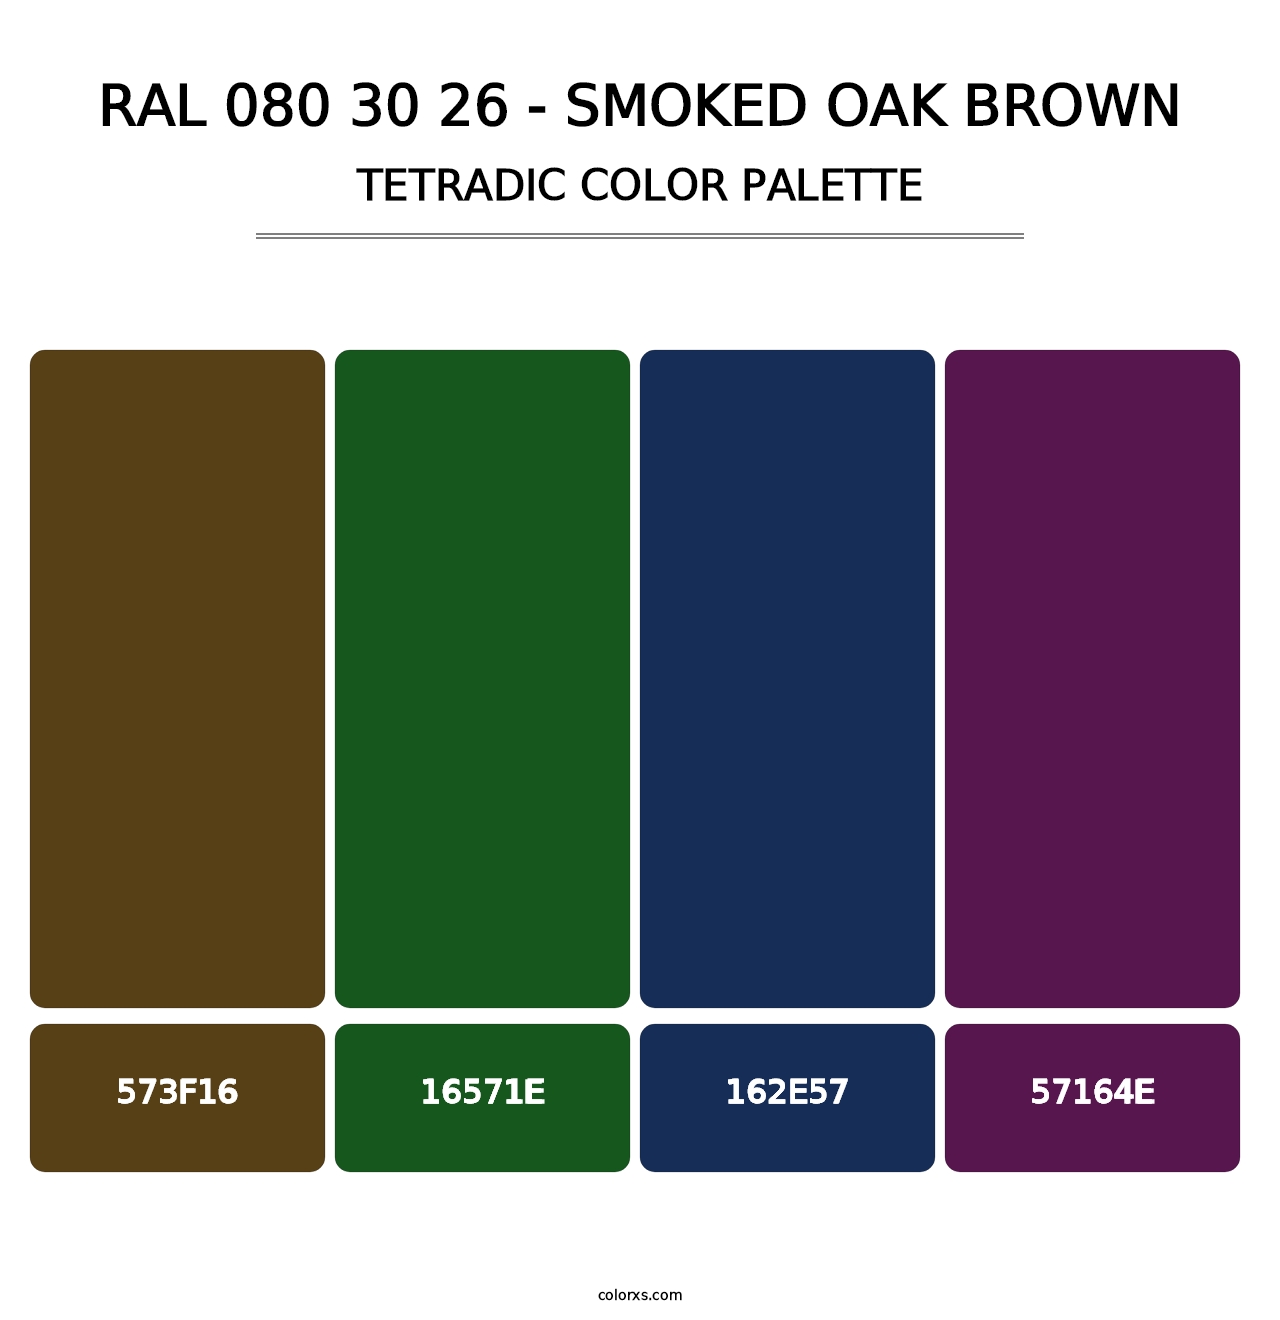 RAL 080 30 26 - Smoked Oak Brown - Tetradic Color Palette